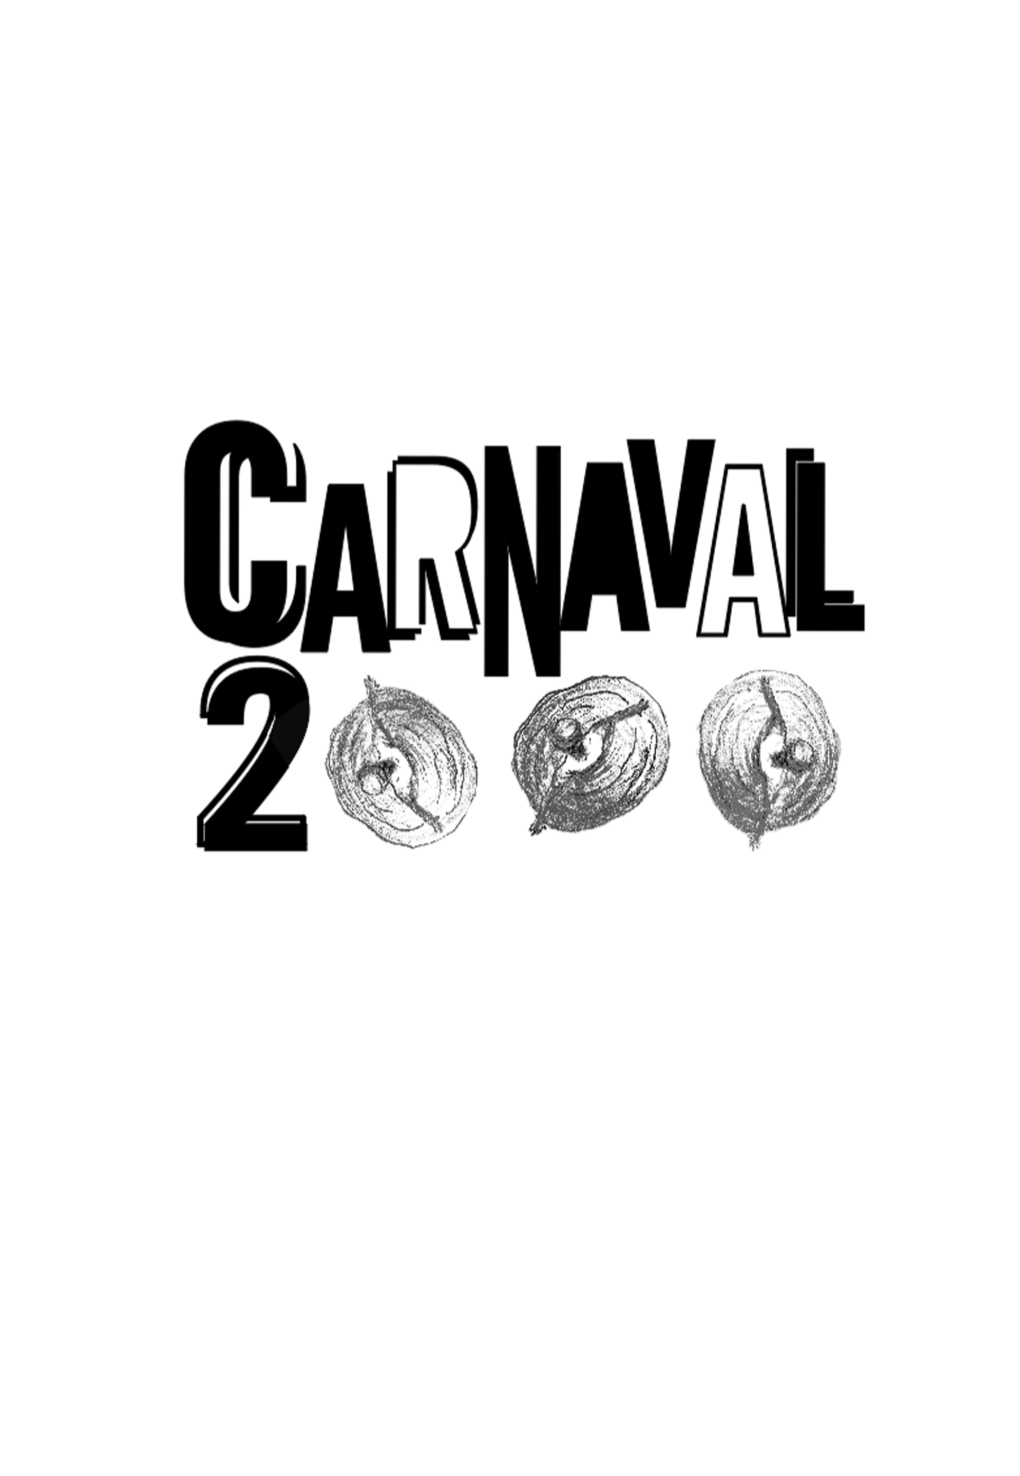 Historico Carnaval.Pdf